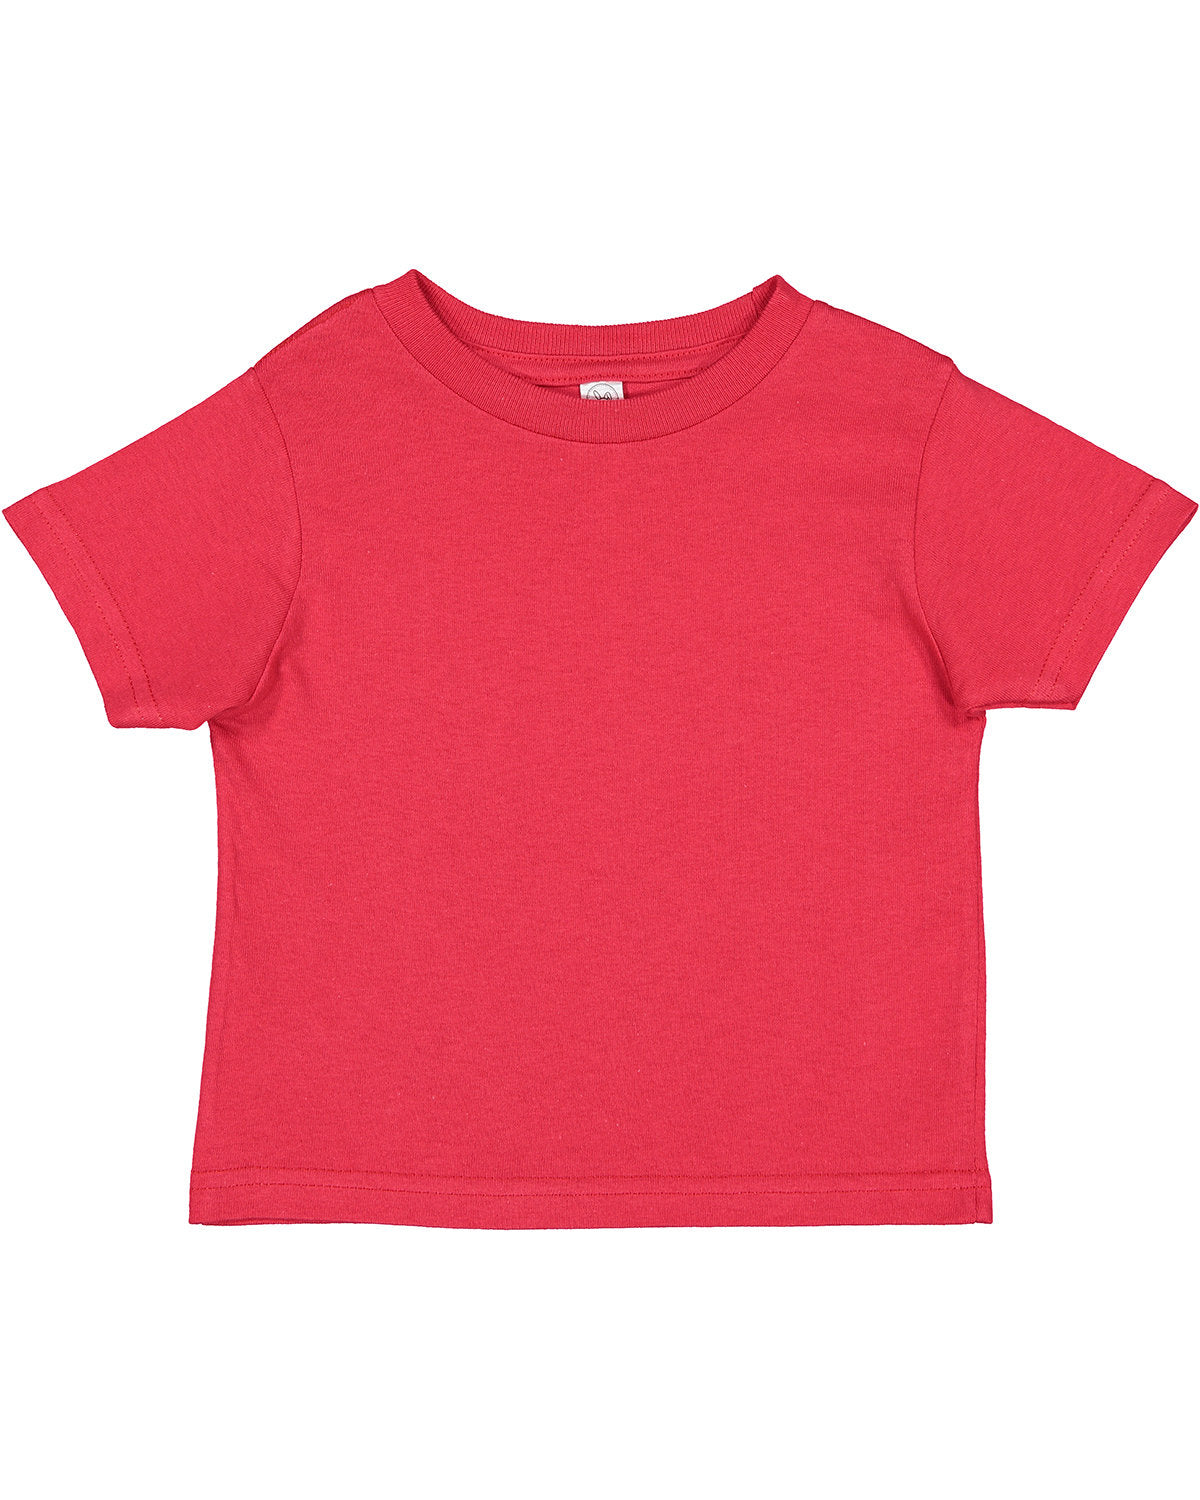 Rabbit Skins Toddler Cotton Jersey T-Shirt 3T / Red